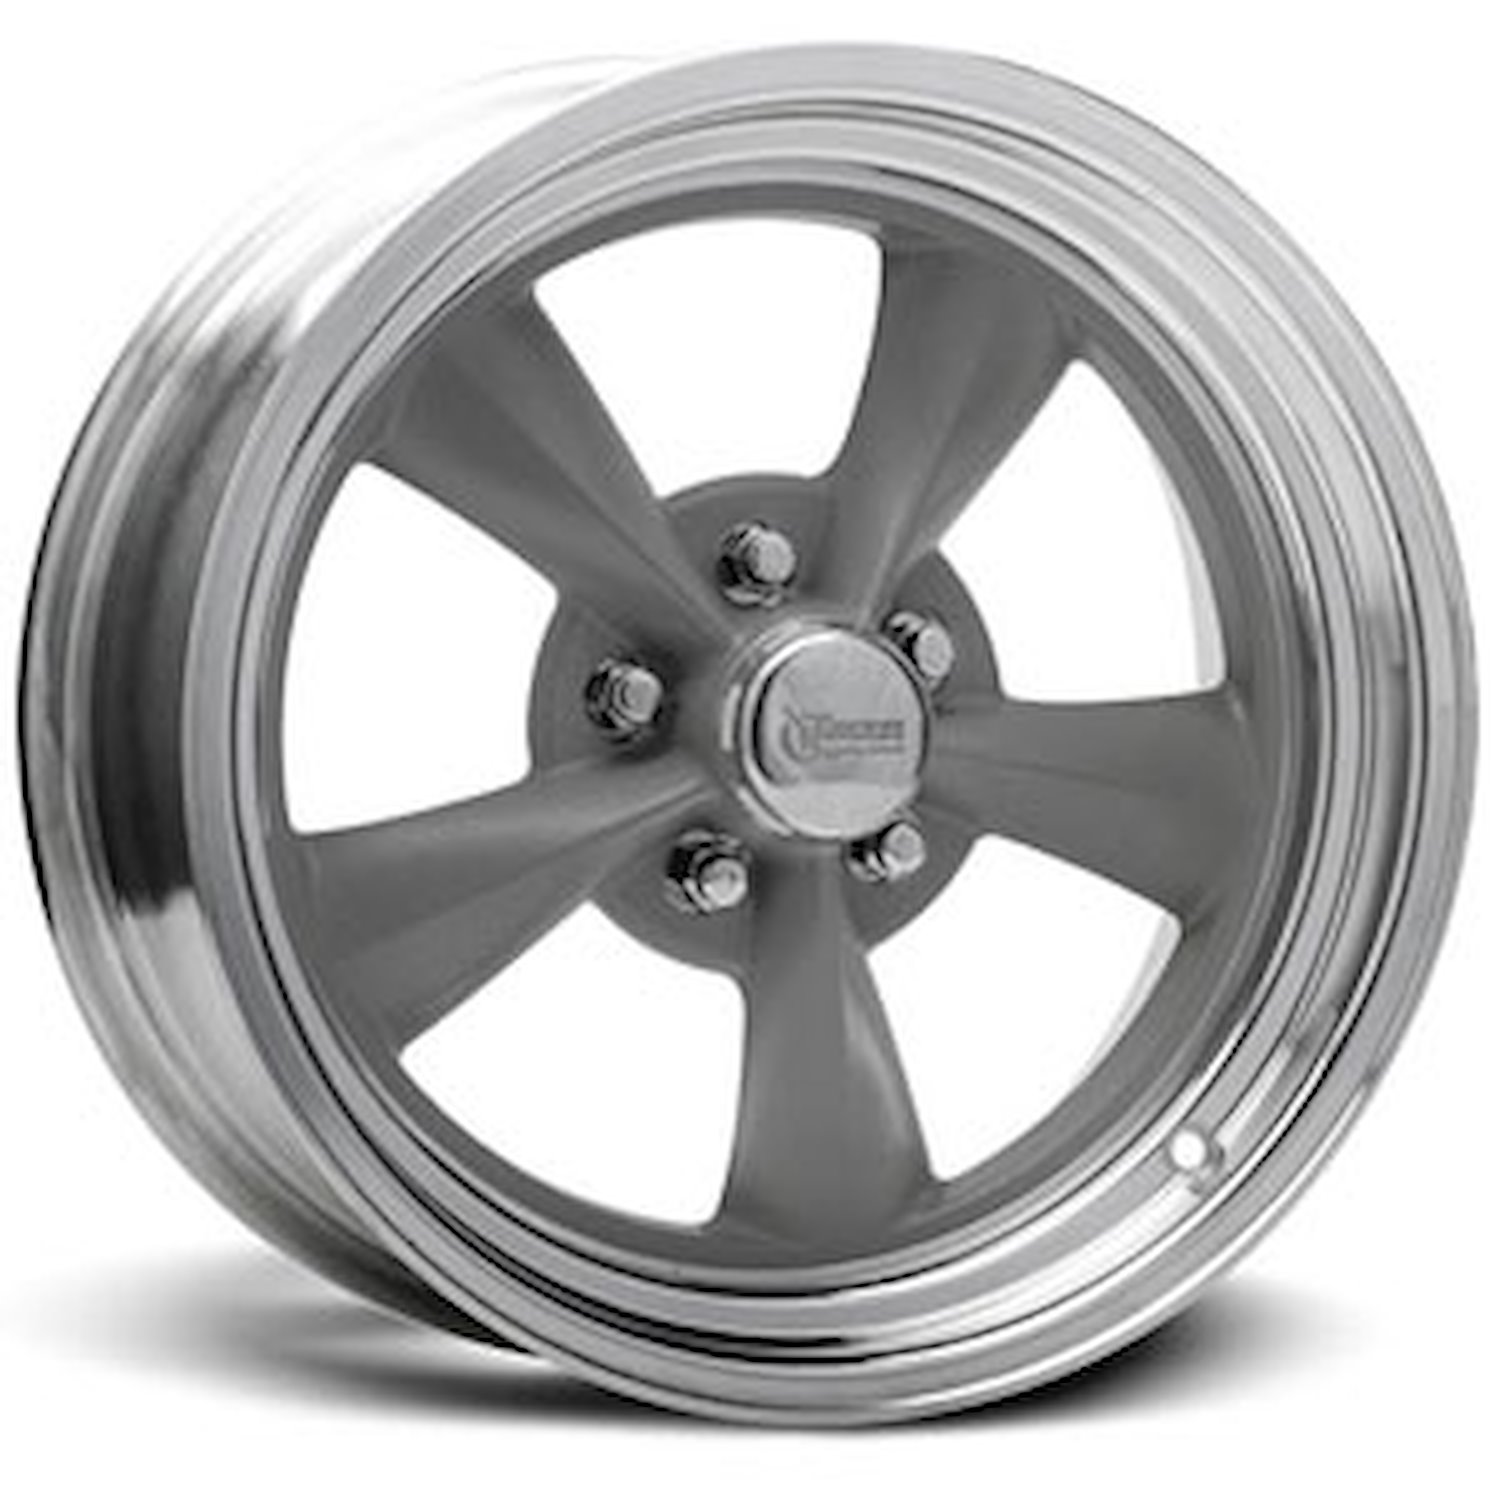 Fuel Wheel - Gray Size: 15" x 7"